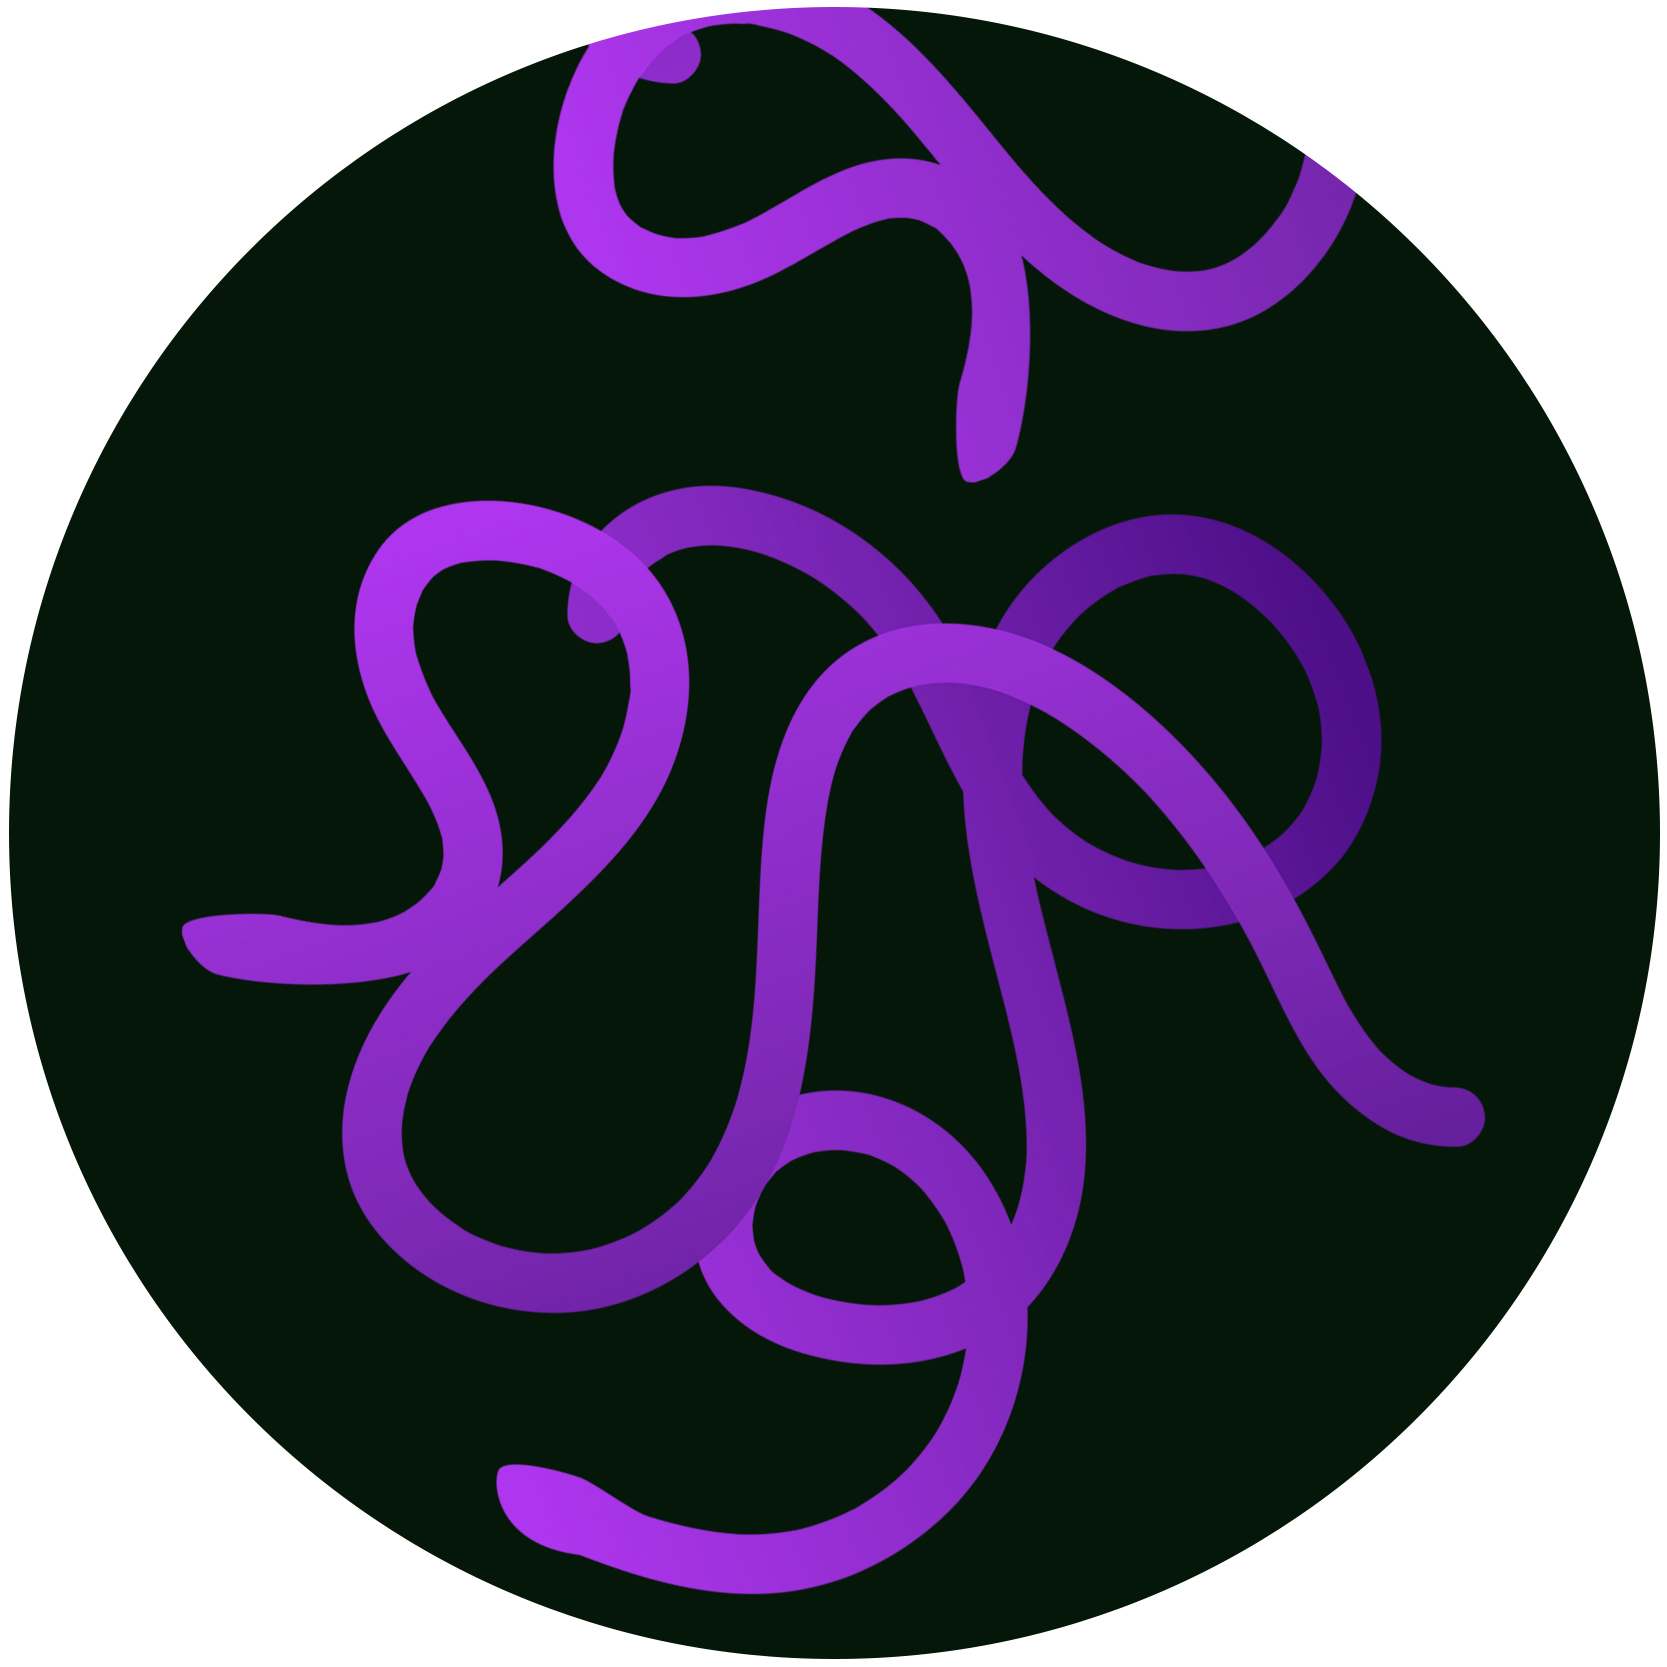 A graphic representation of the ebola virus